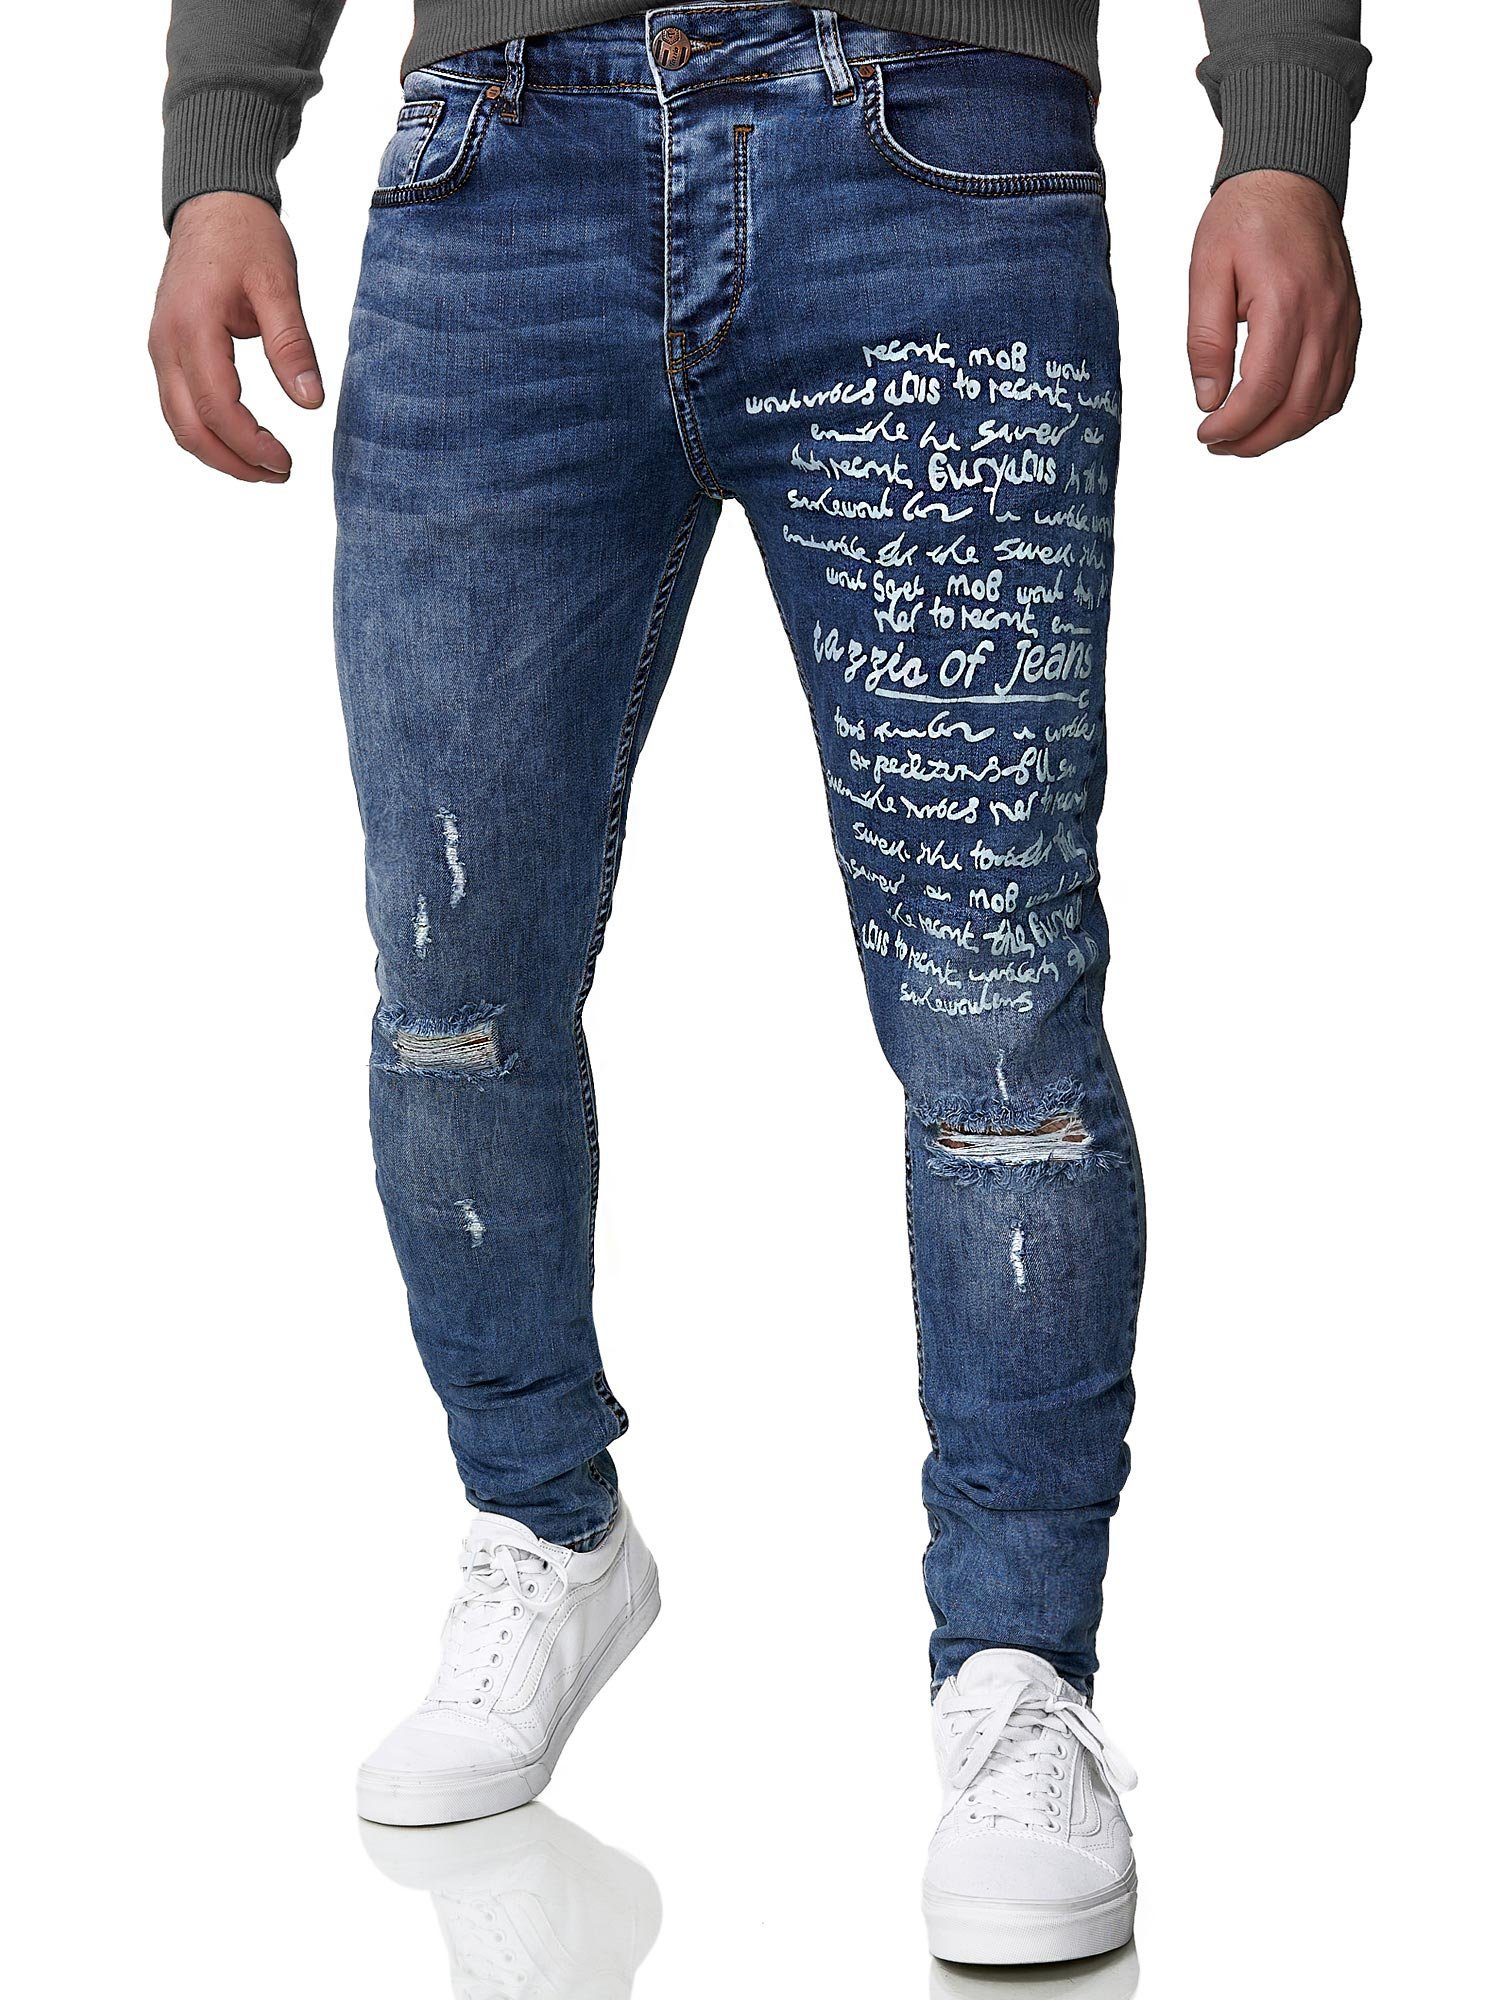 Herren Jeans Tazzio Skinny-fit-Jeans A102 im Destroyed-Look